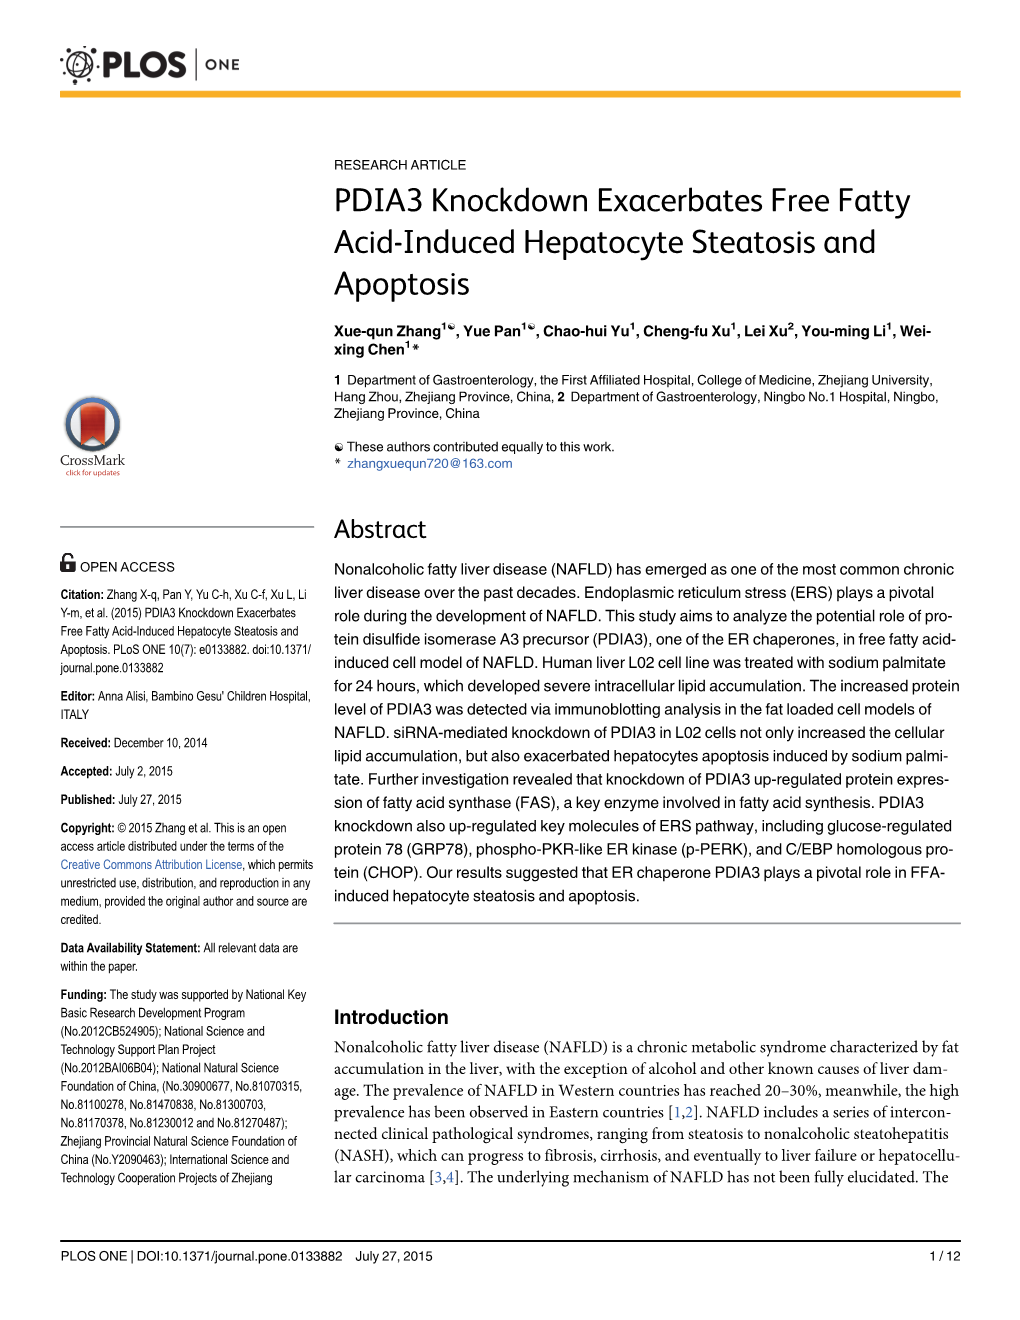 PDIA3 Knockdown Exacerbates Free Fatty Acid-Induced Hepatocyte Steatosis and Apoptosis